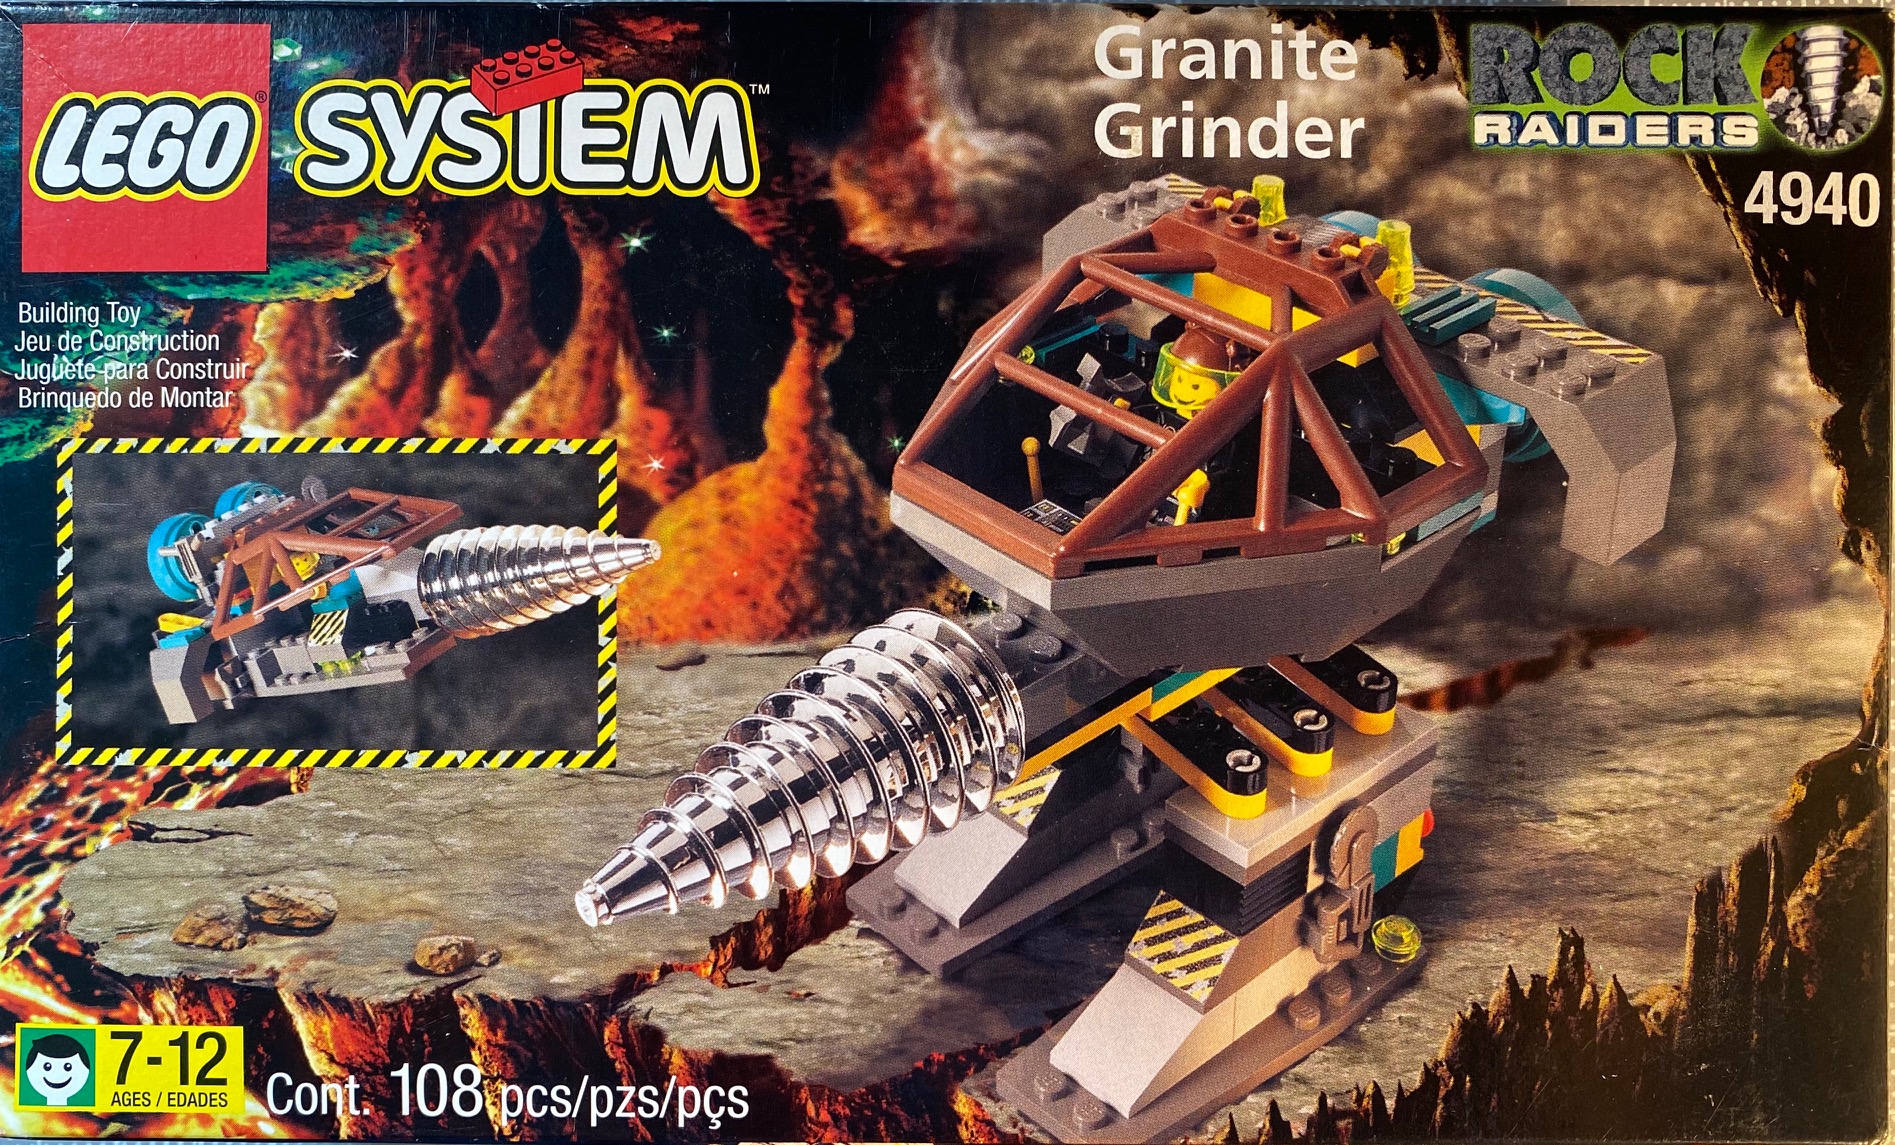 4940: Granite Grinder - Back of the Box Builds